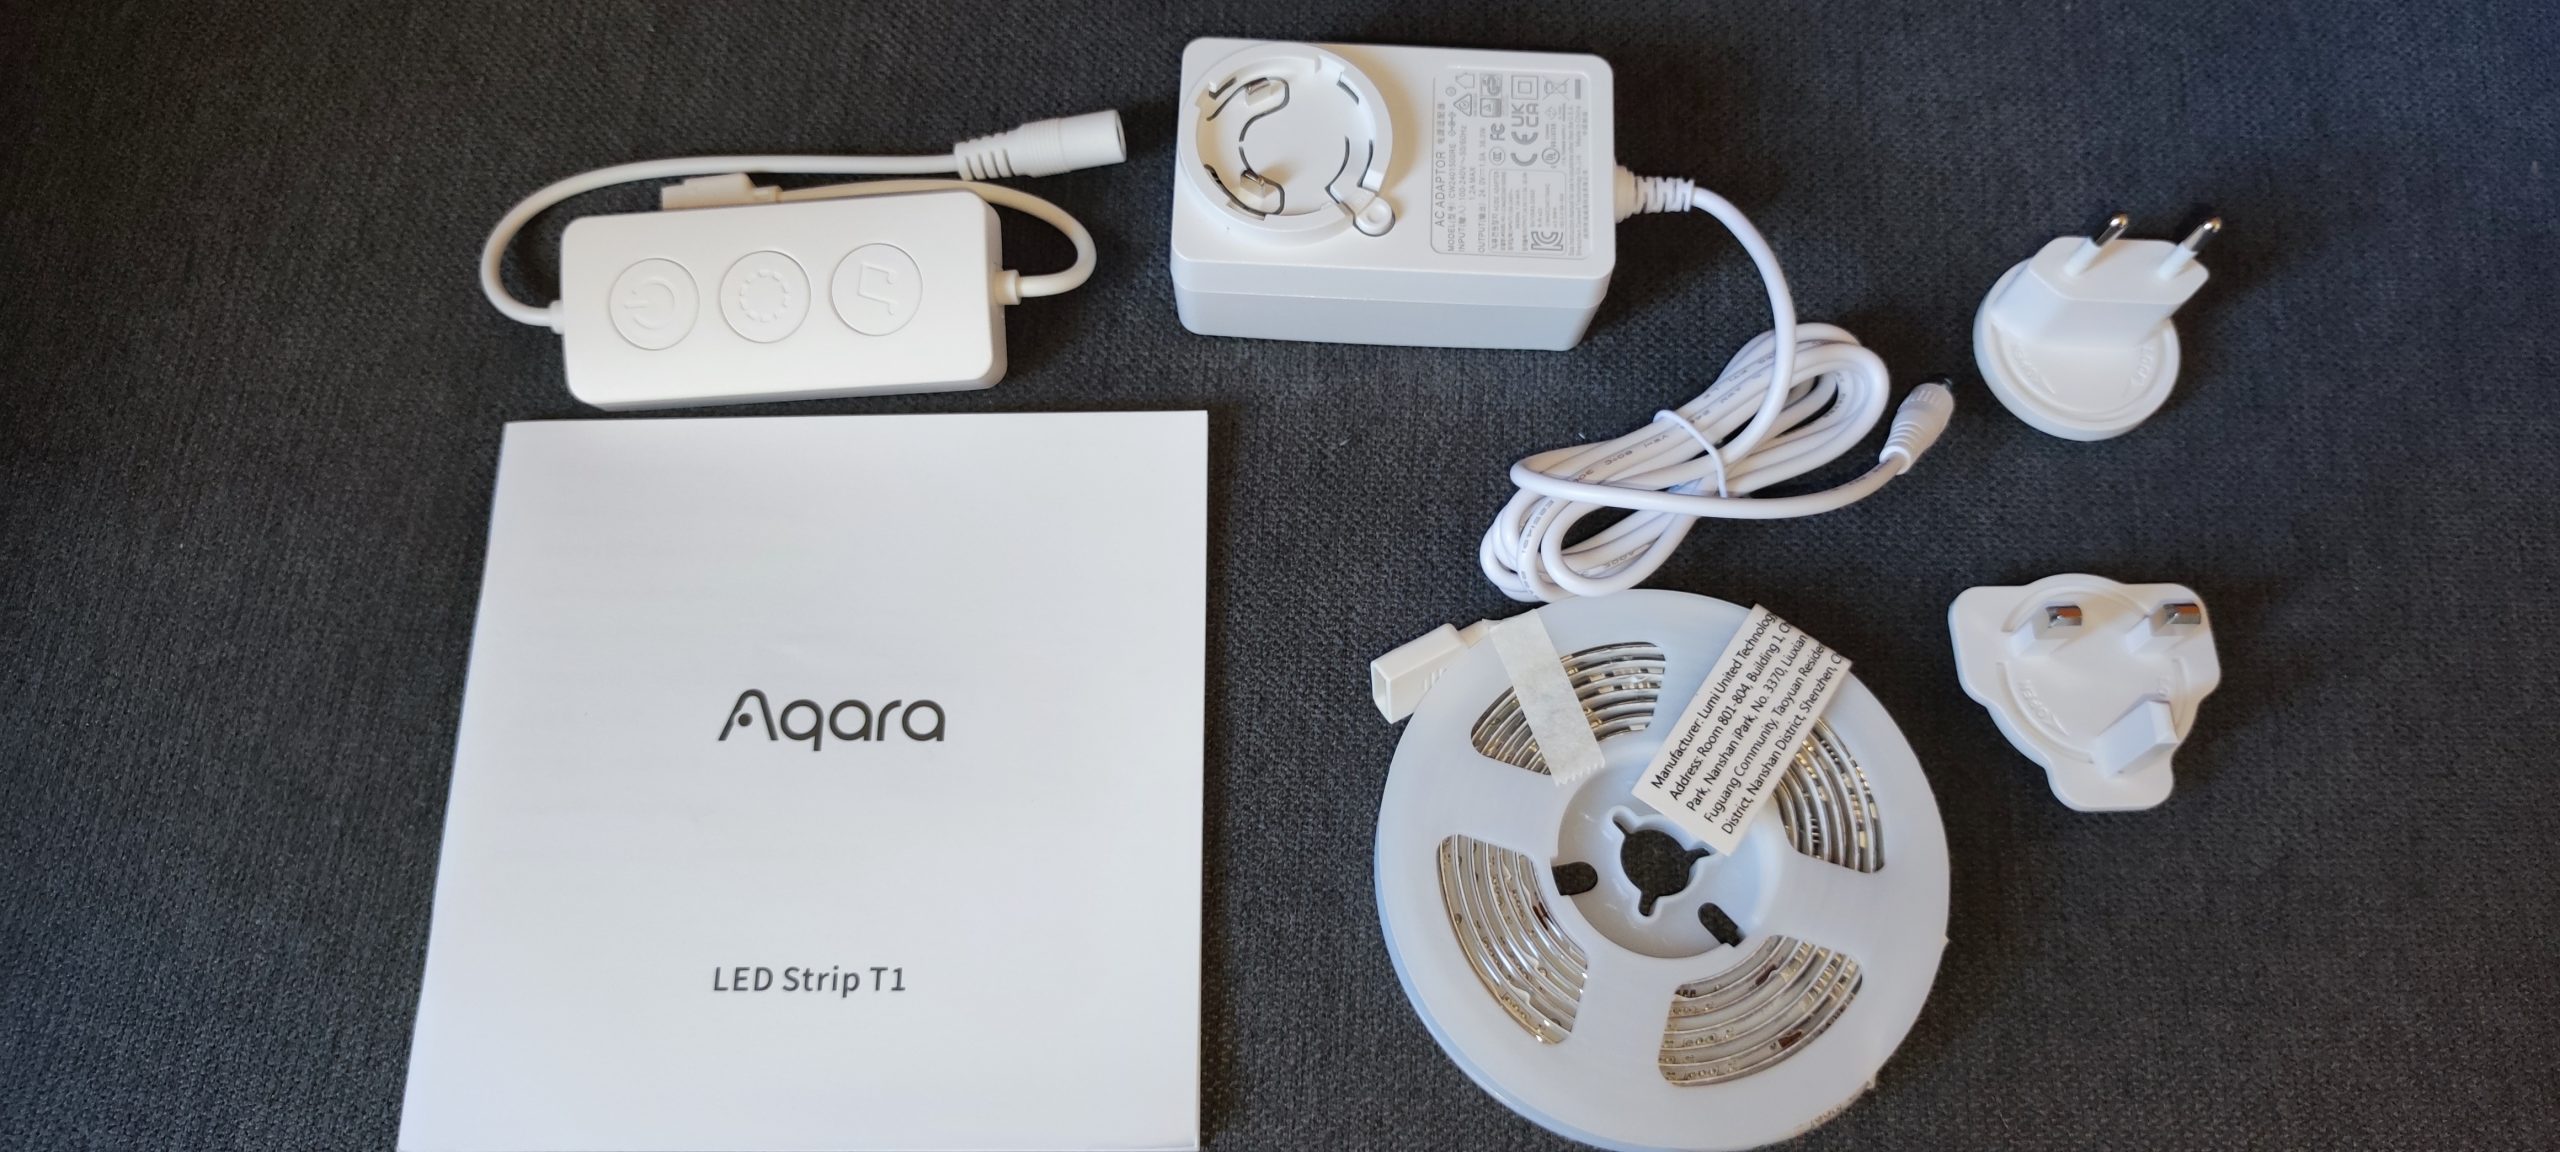 Découverte du ruban LED connecté RGBIC AQARA Zigbee 3.0